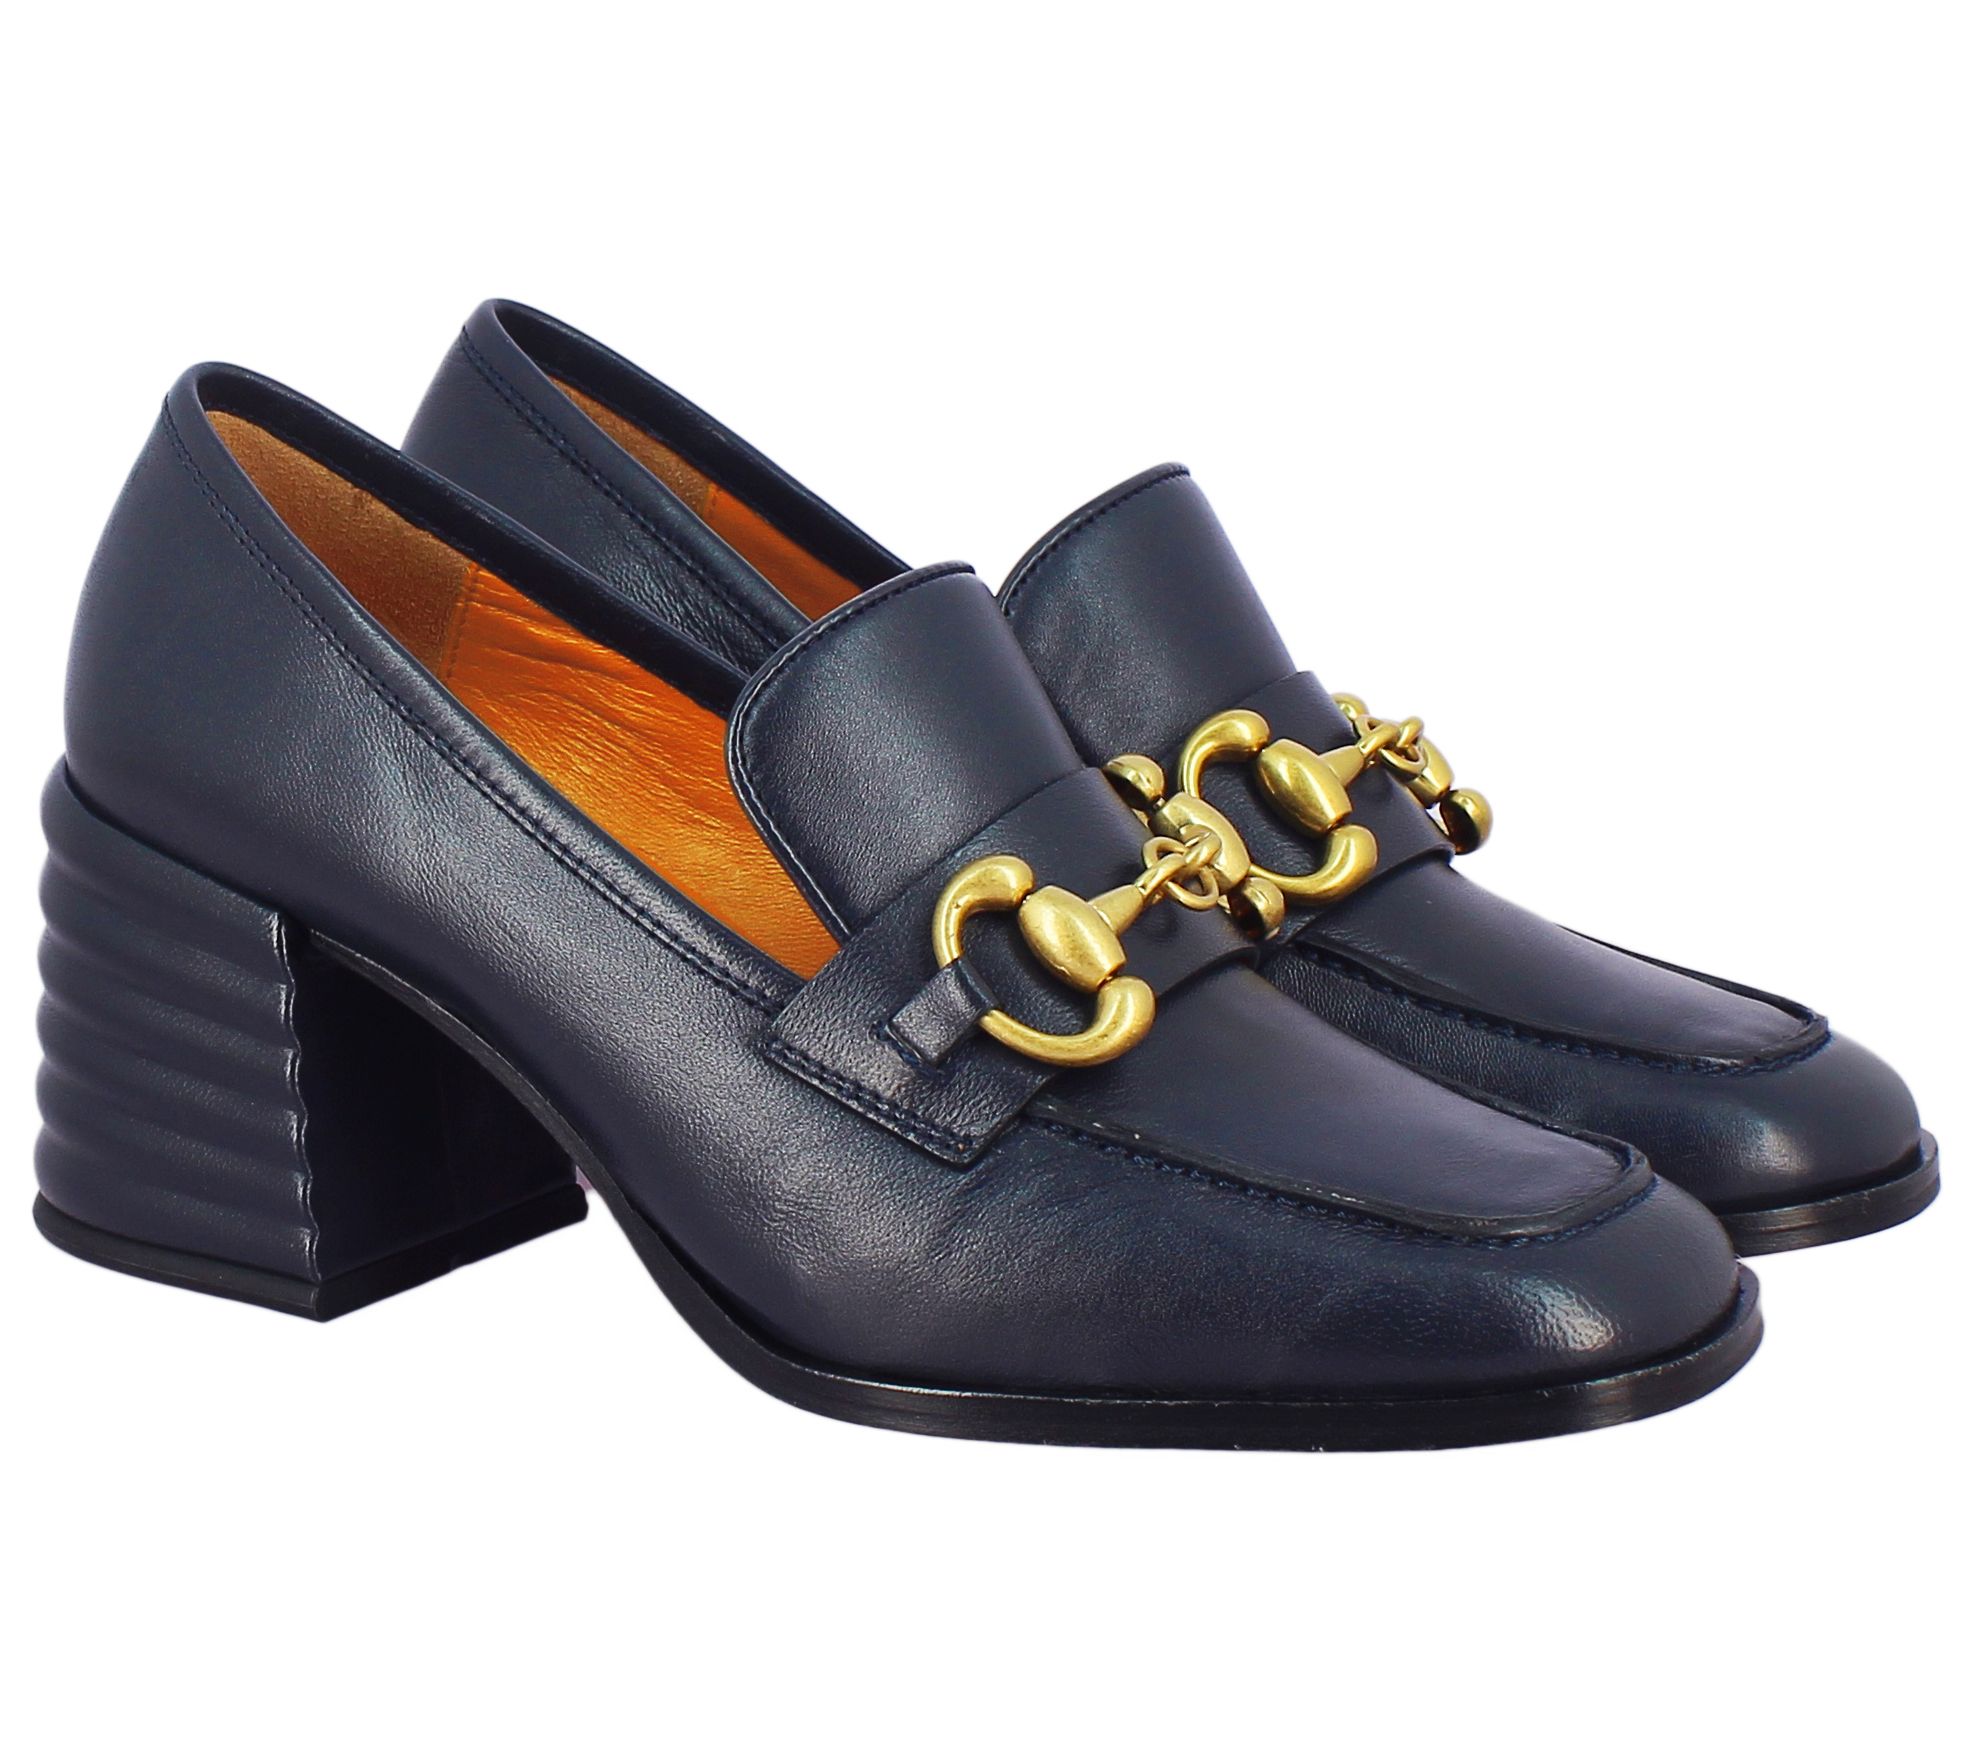 Saint G Leather Heels Moccasins - Valentina - QVC.com